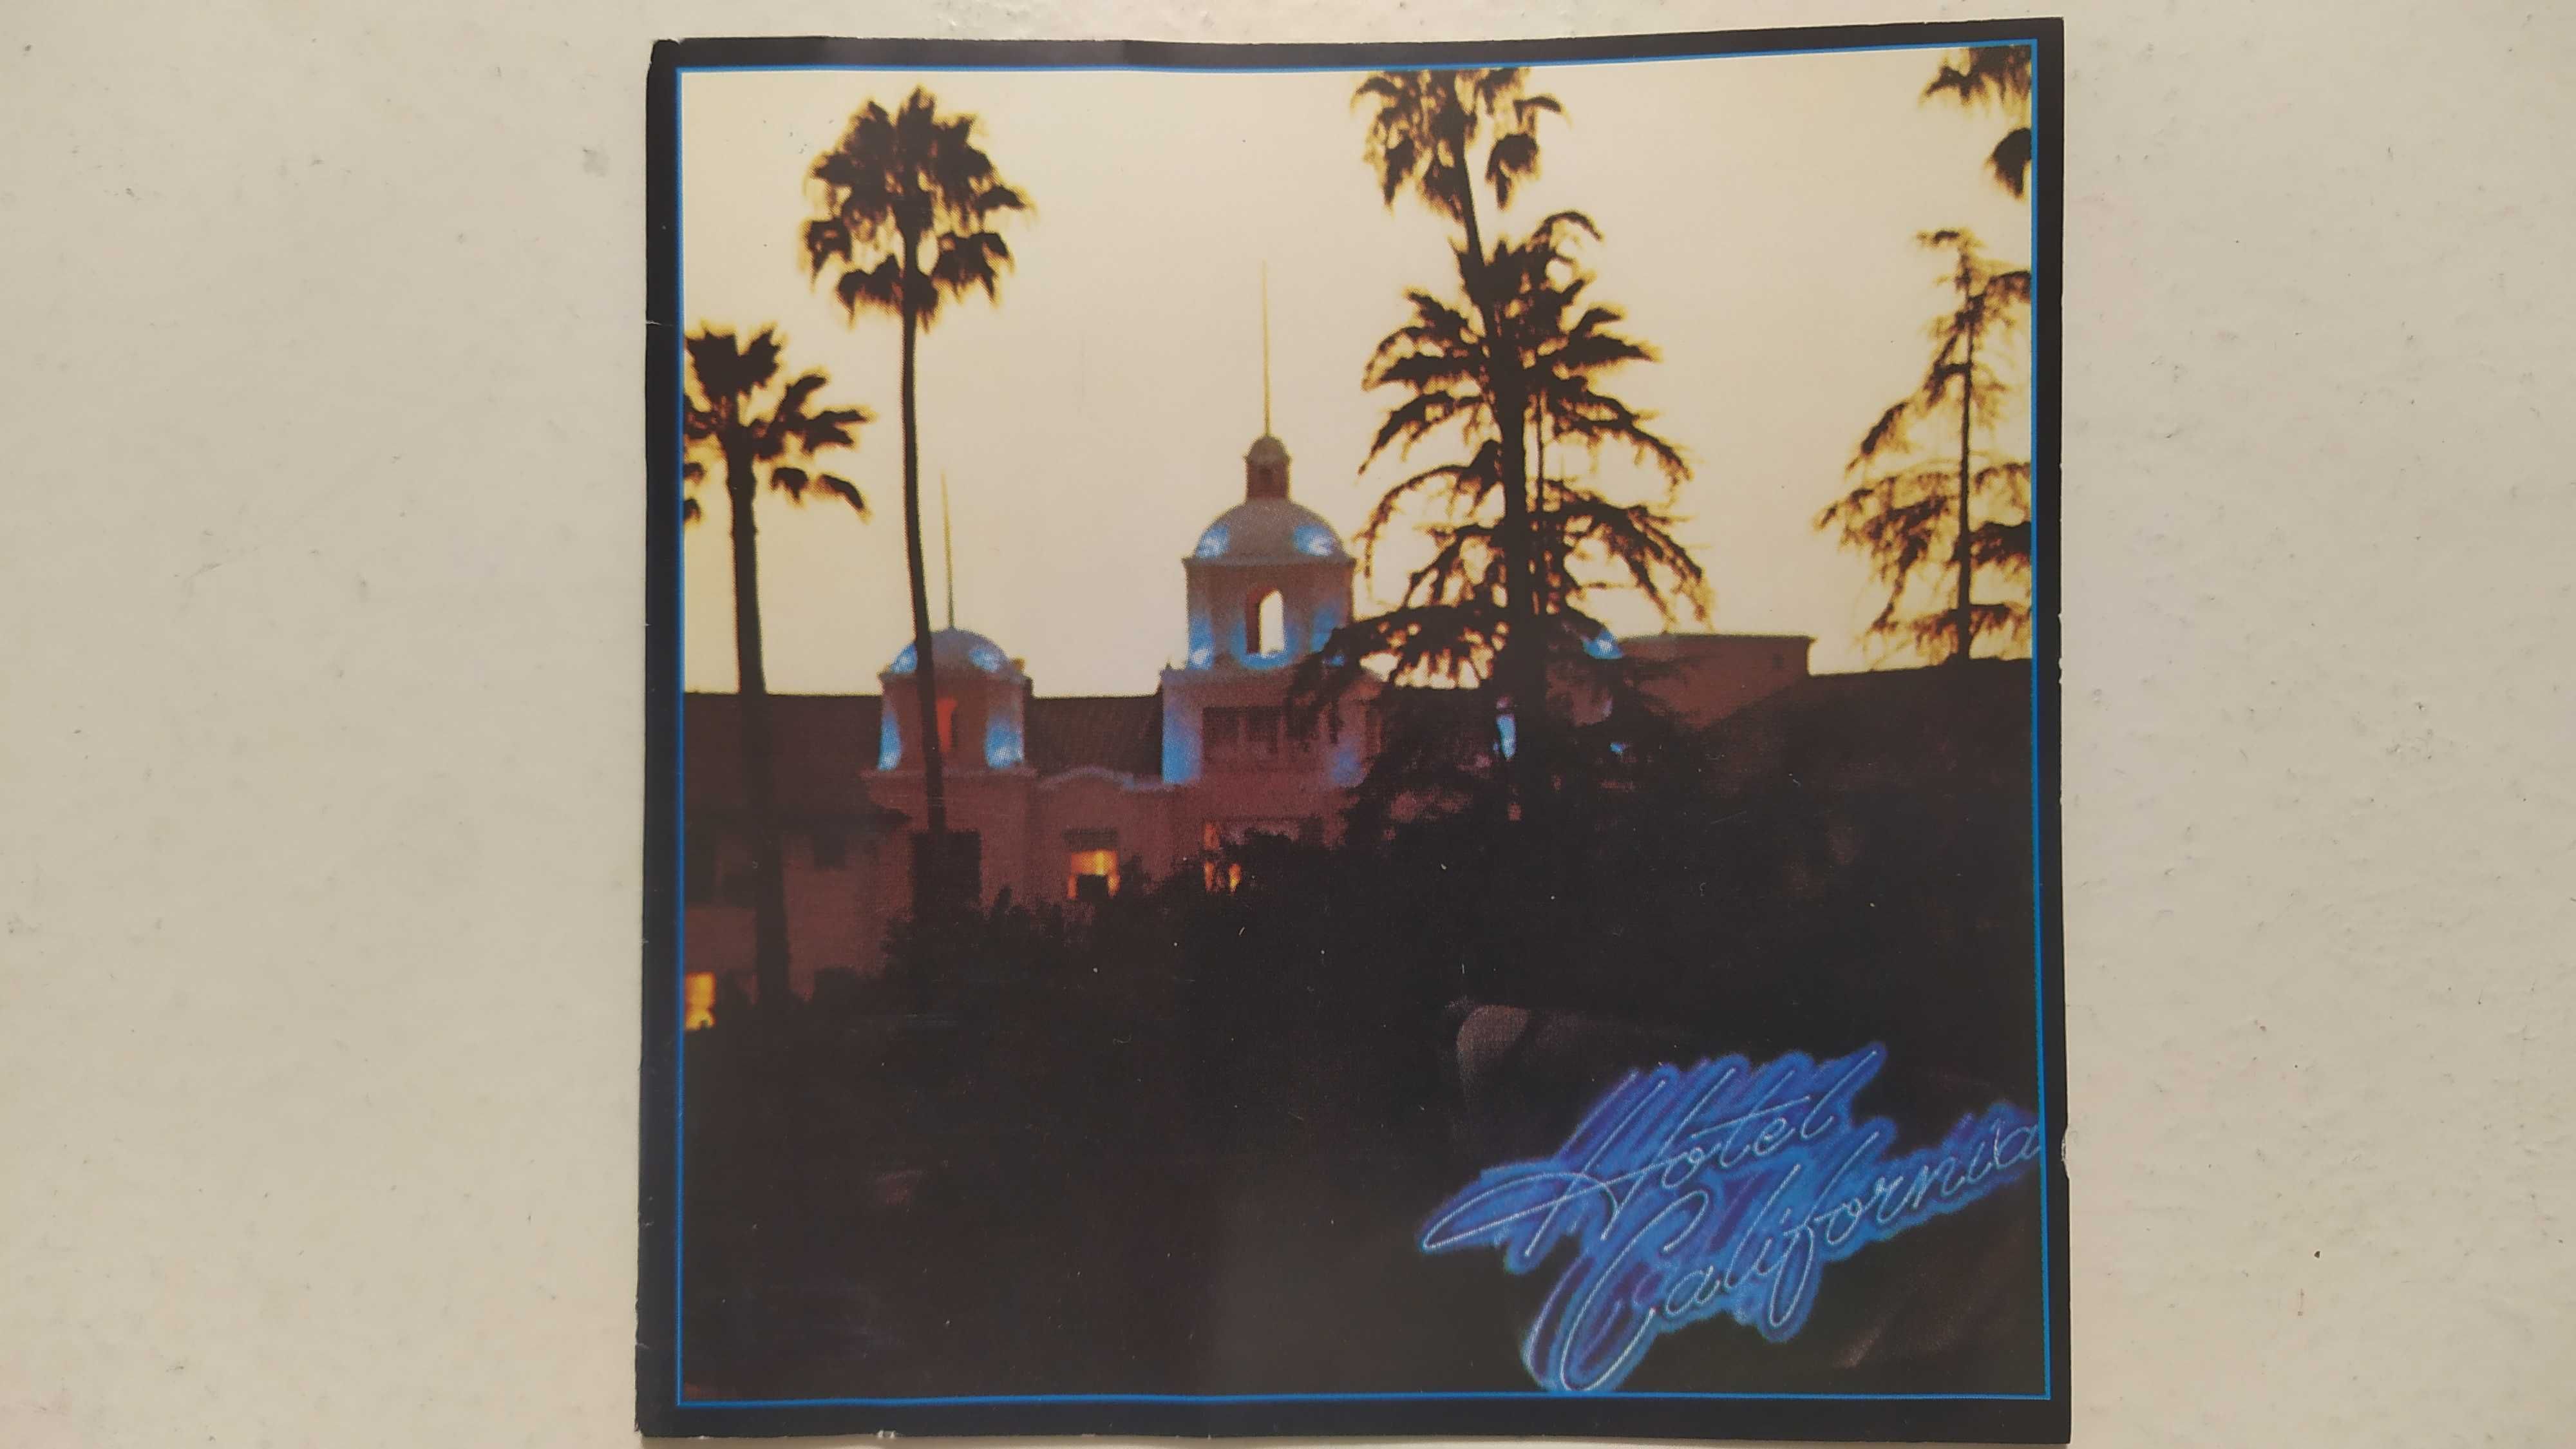 Eagles Hotel California CD